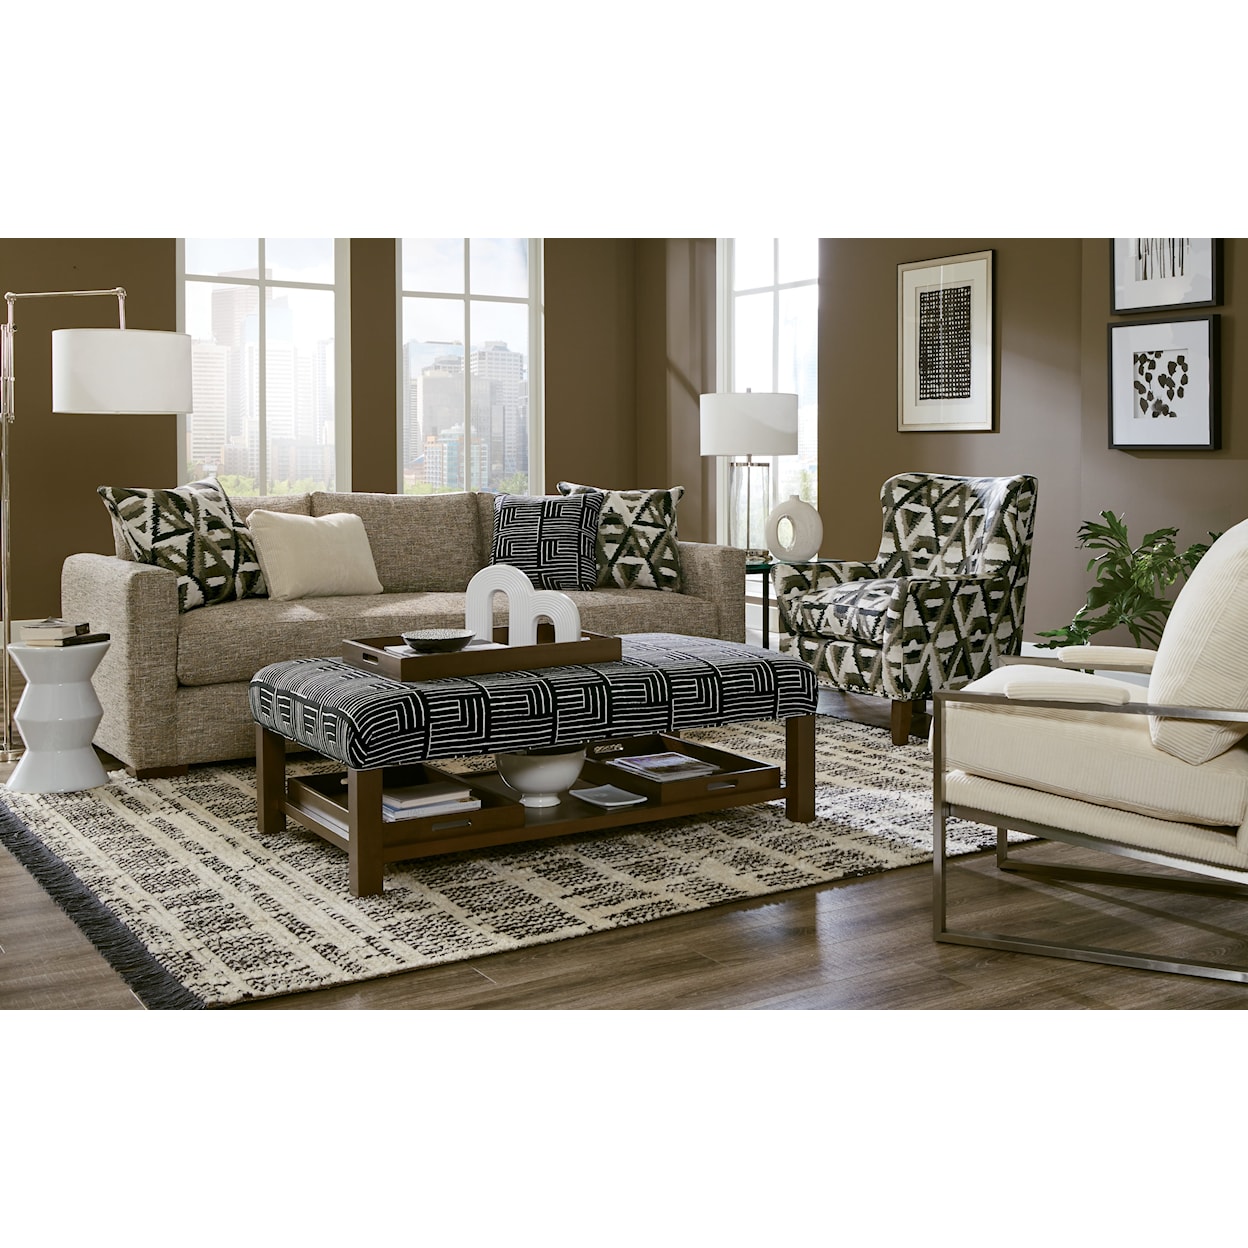 Craftmaster 792750BD Bench Cushion Sofa